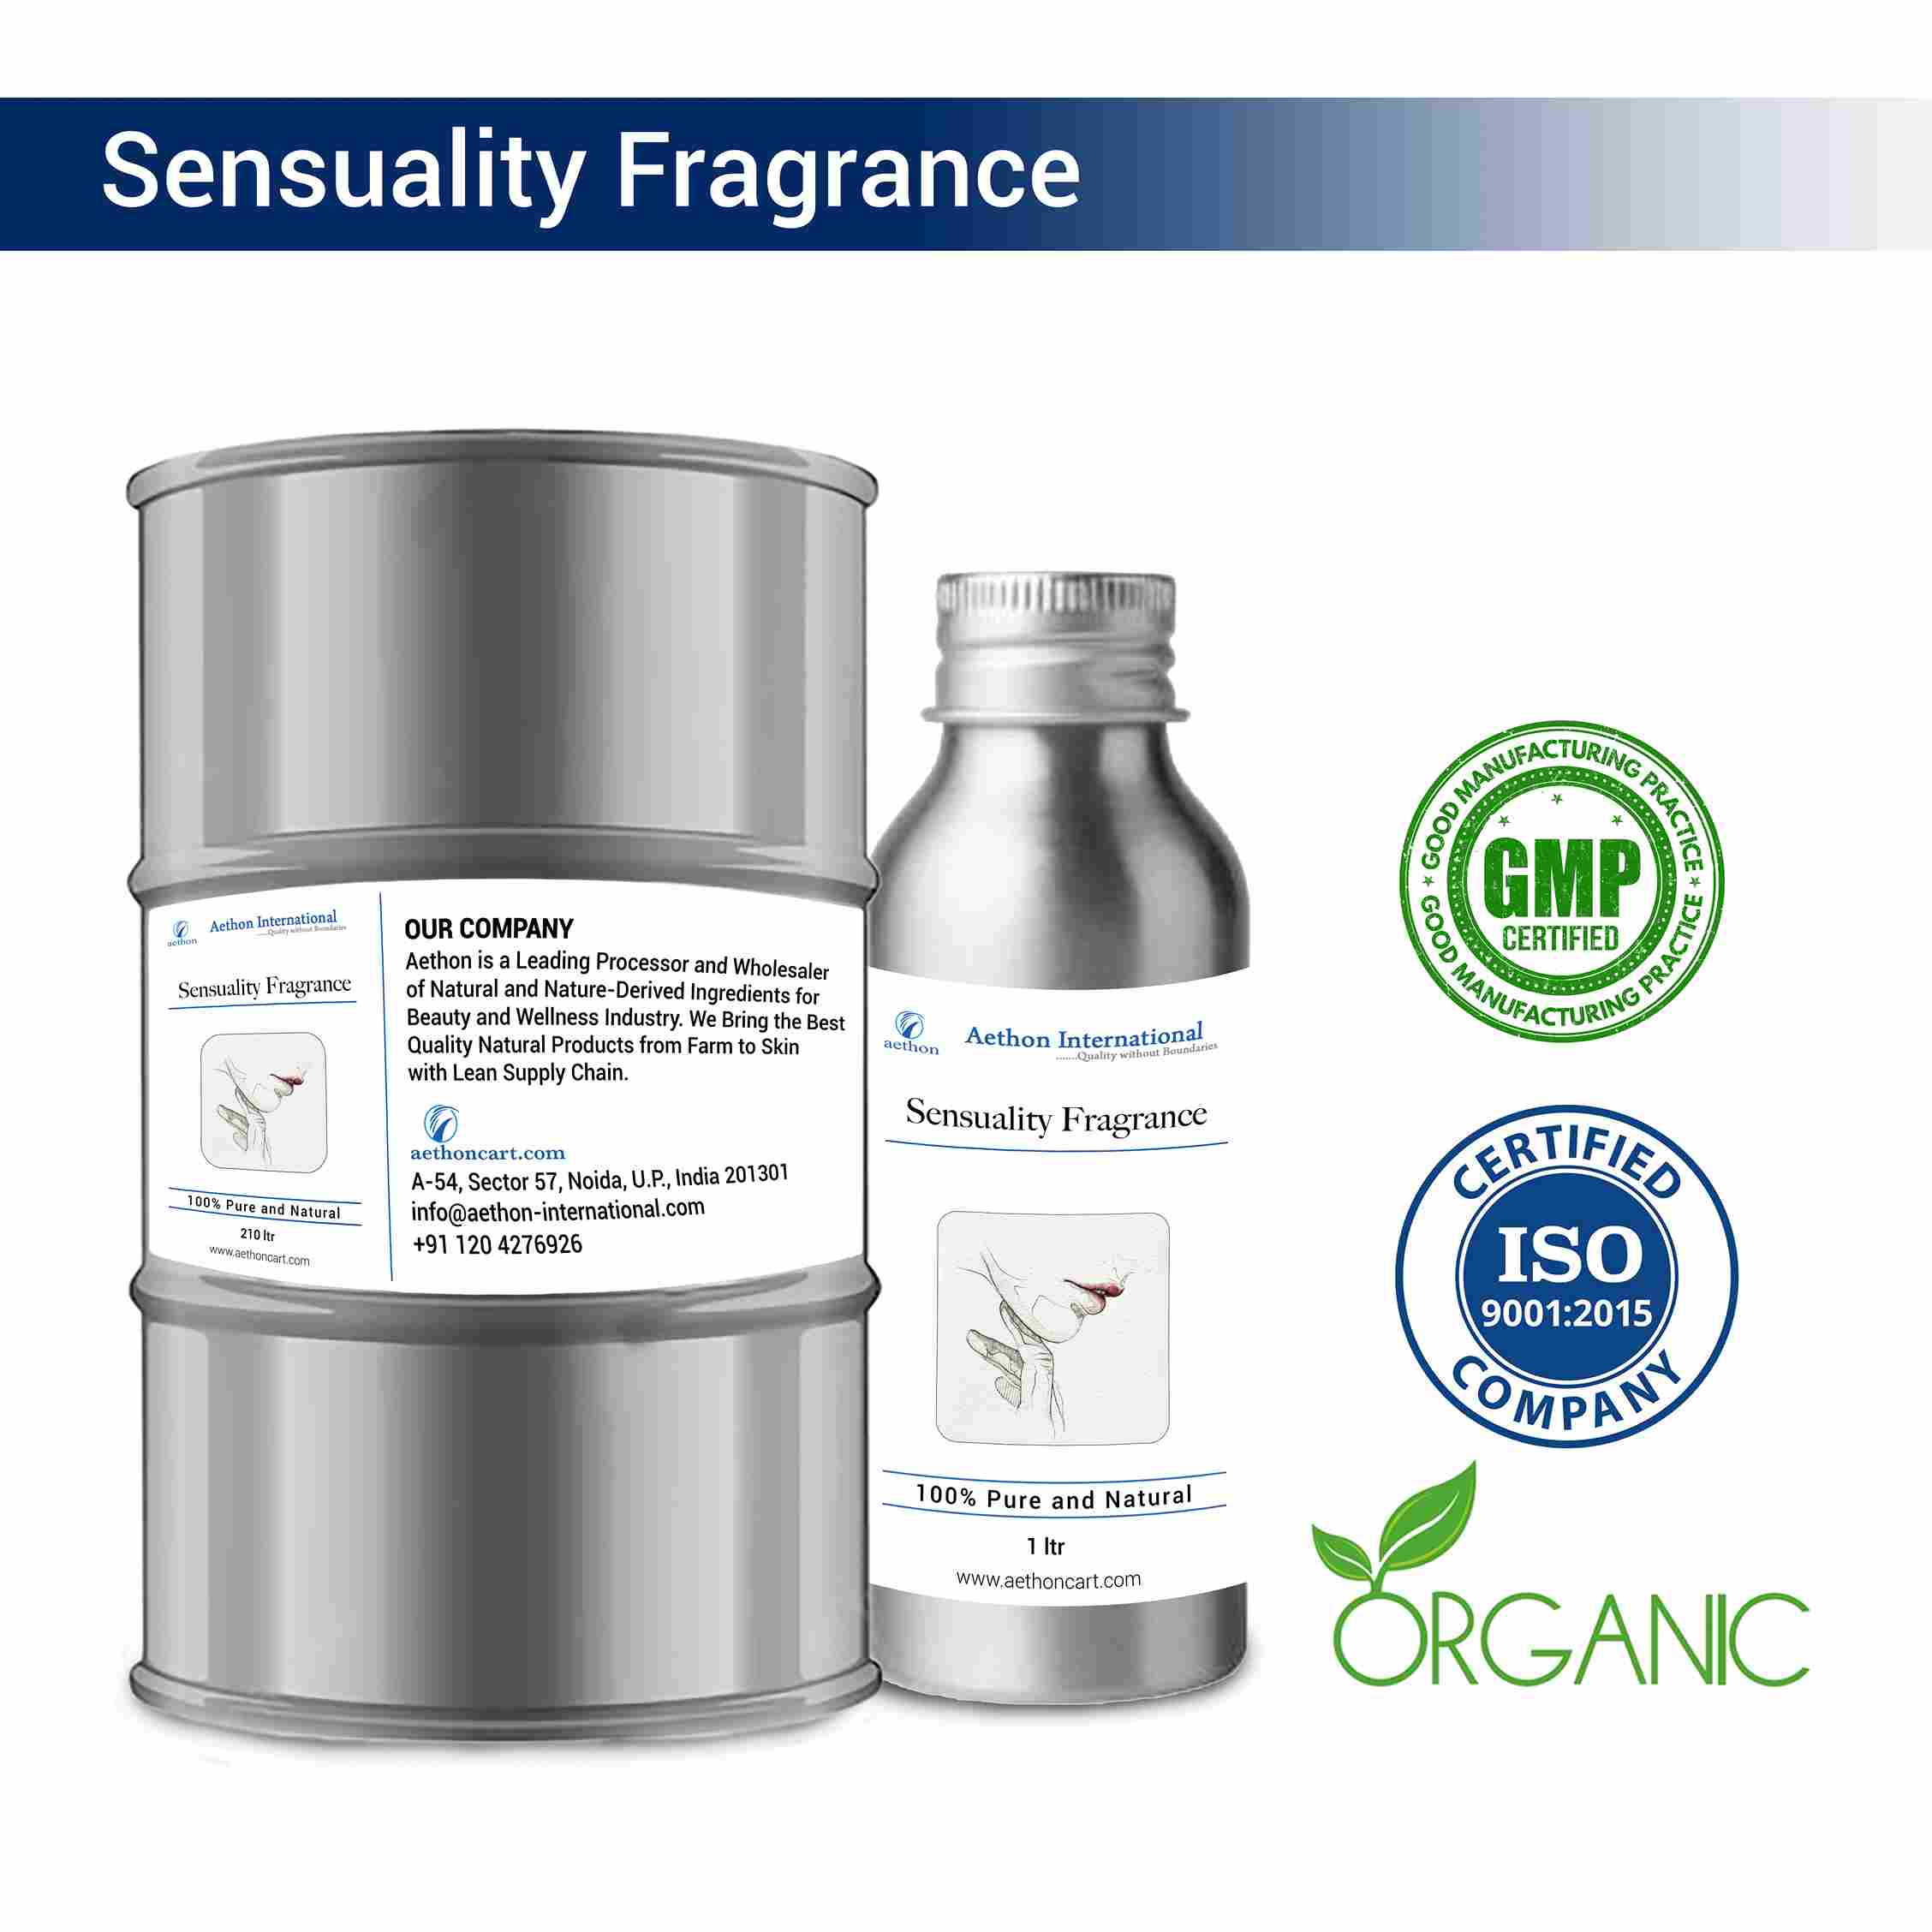 Sensuality Fragrance